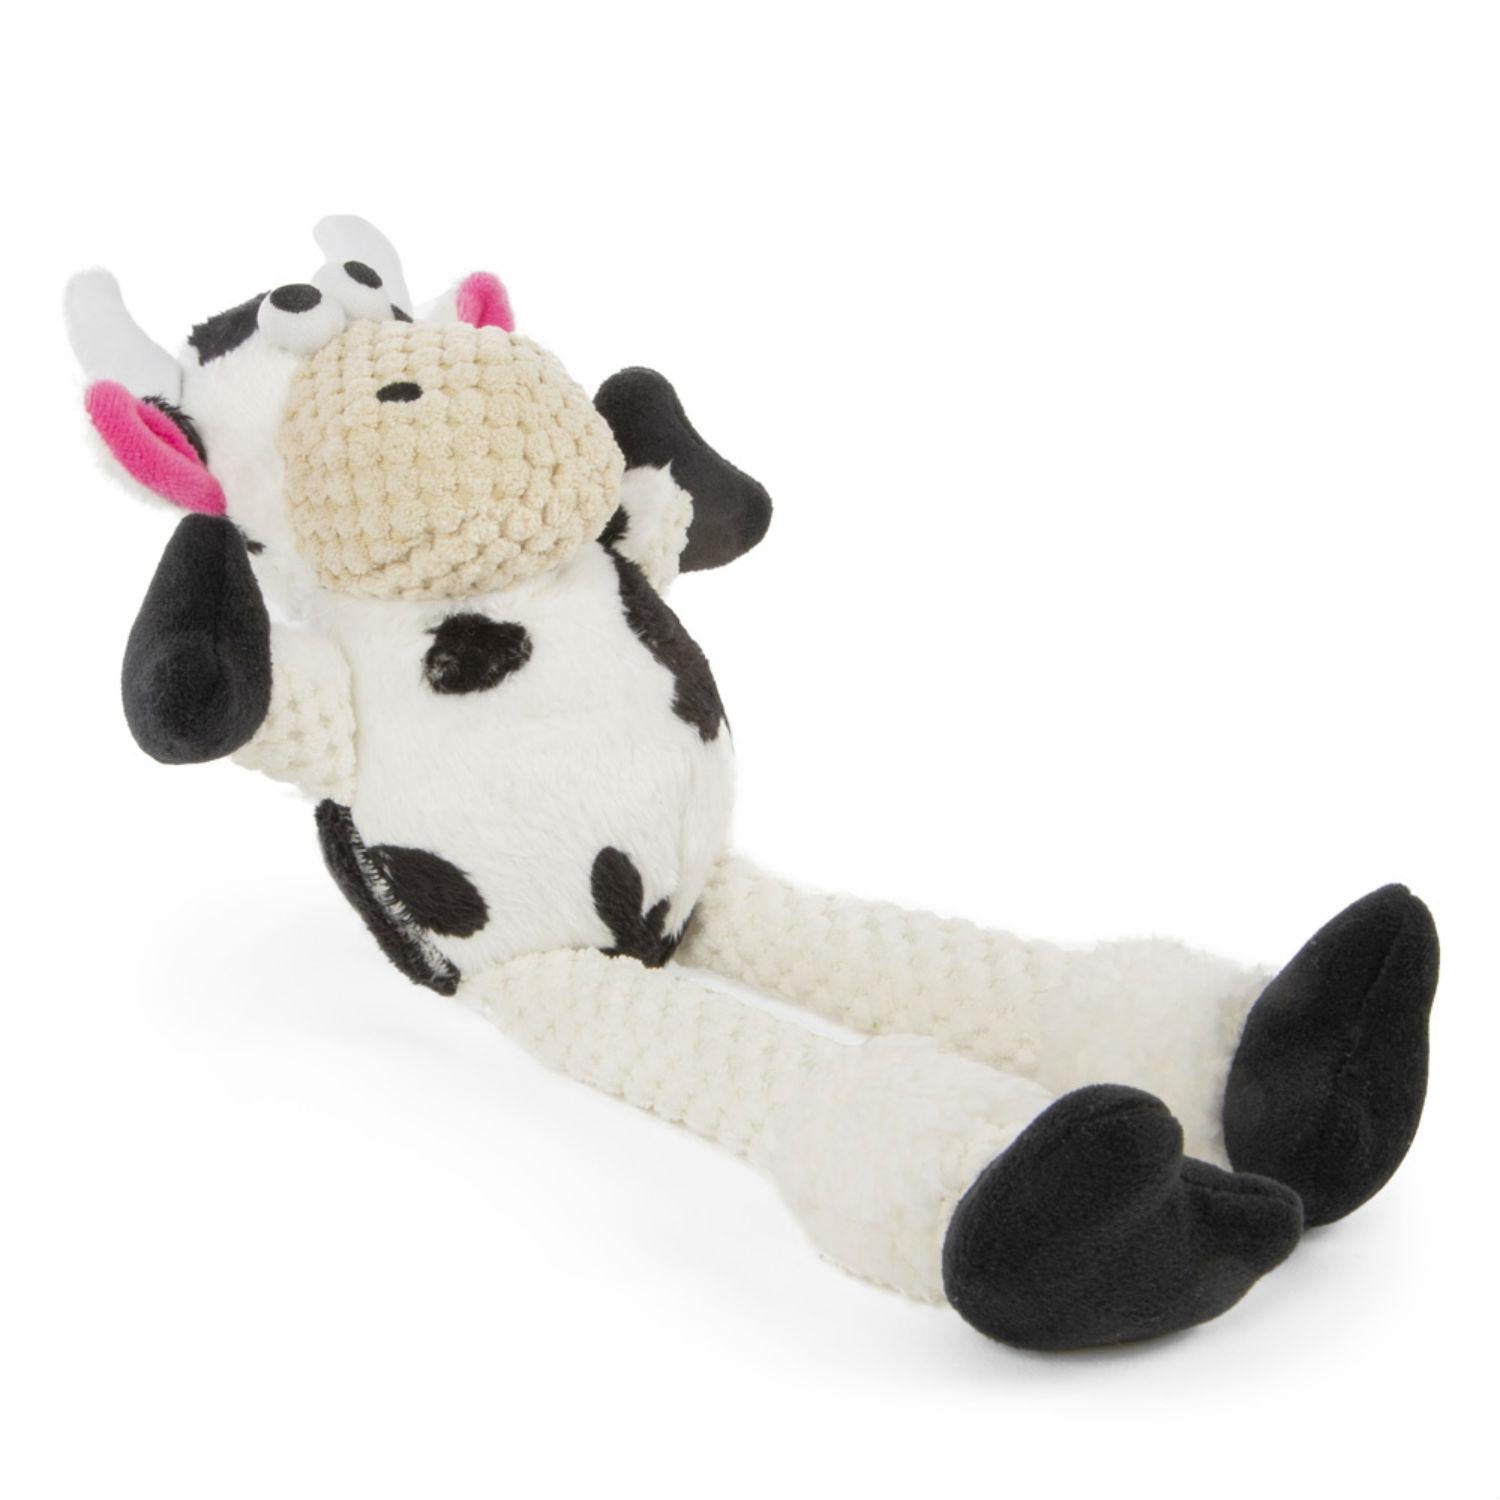 goDog Skinny Cow Durable Squeaky Plush Dog Toy